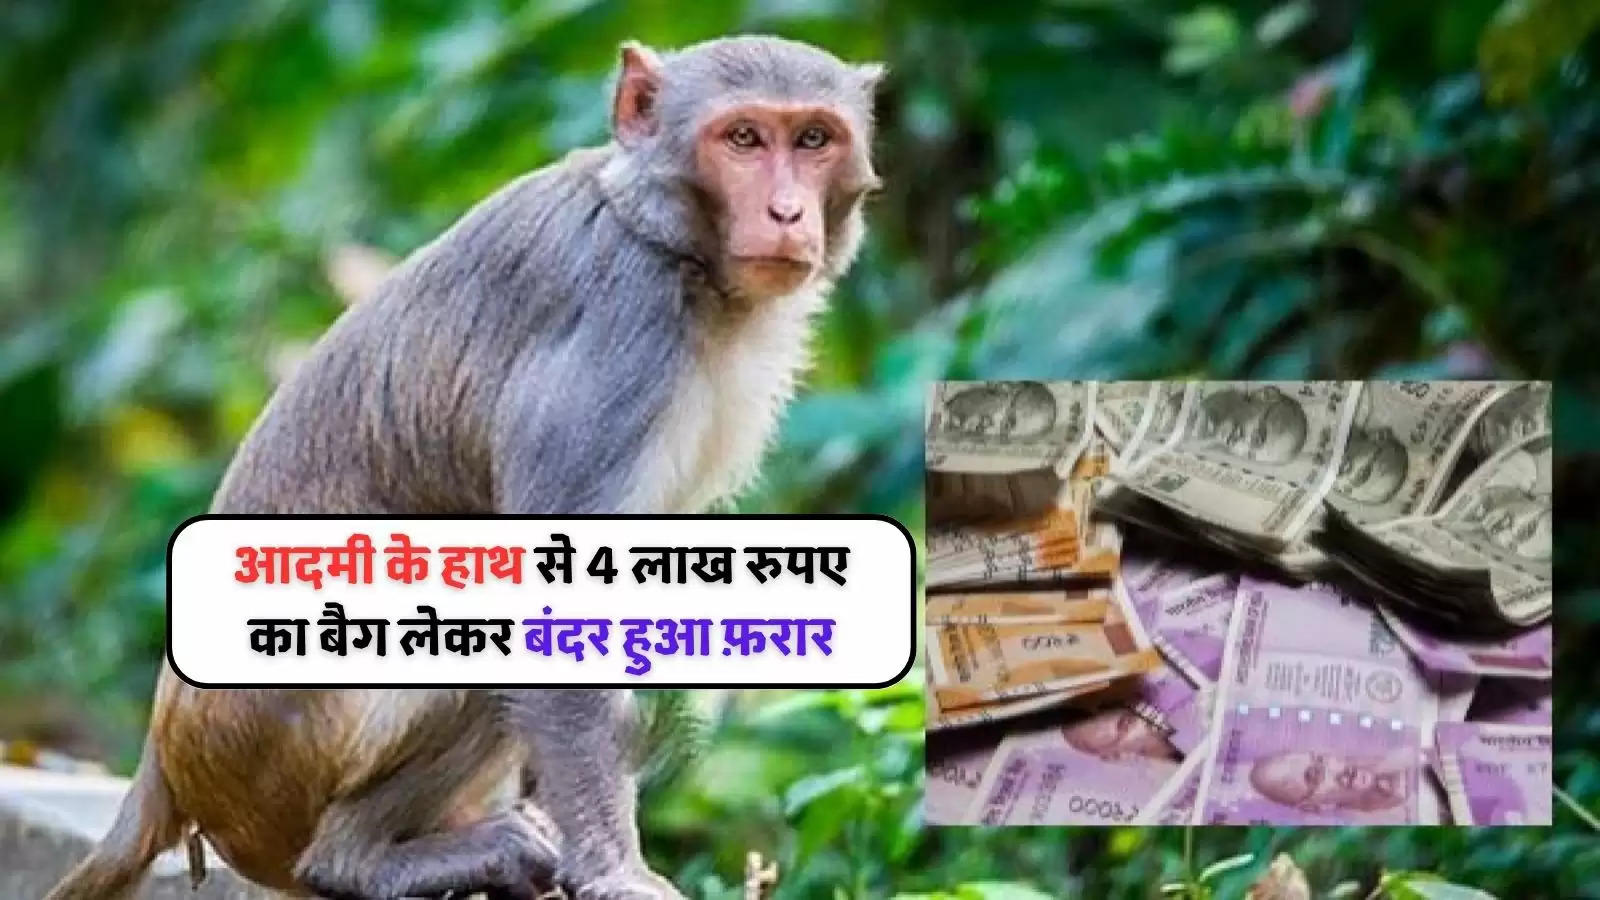 monkey-loot-four-lakh (1)